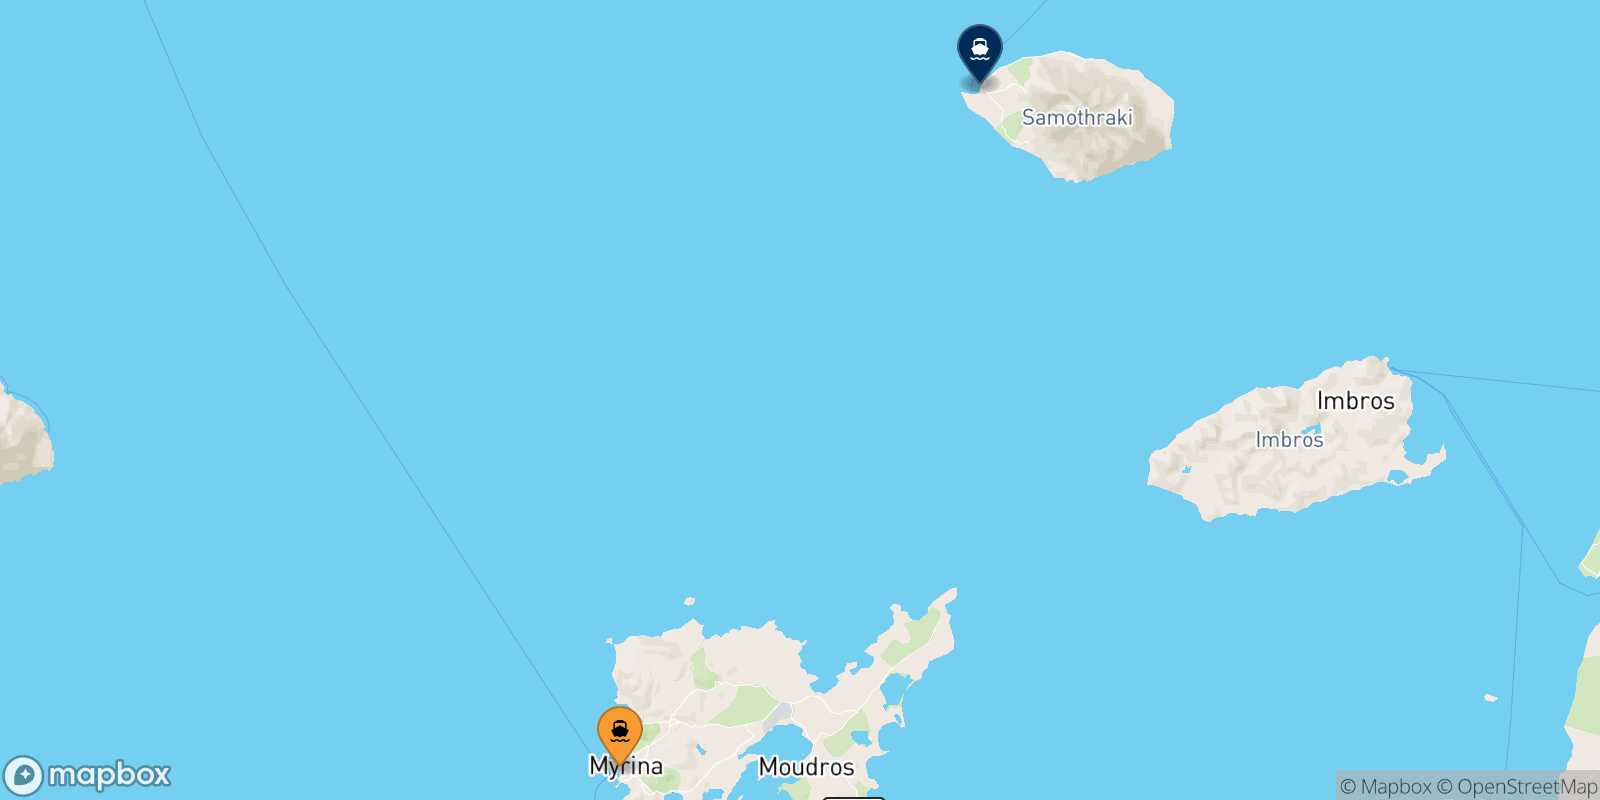 Myrina (Limnos) Samothraki route map